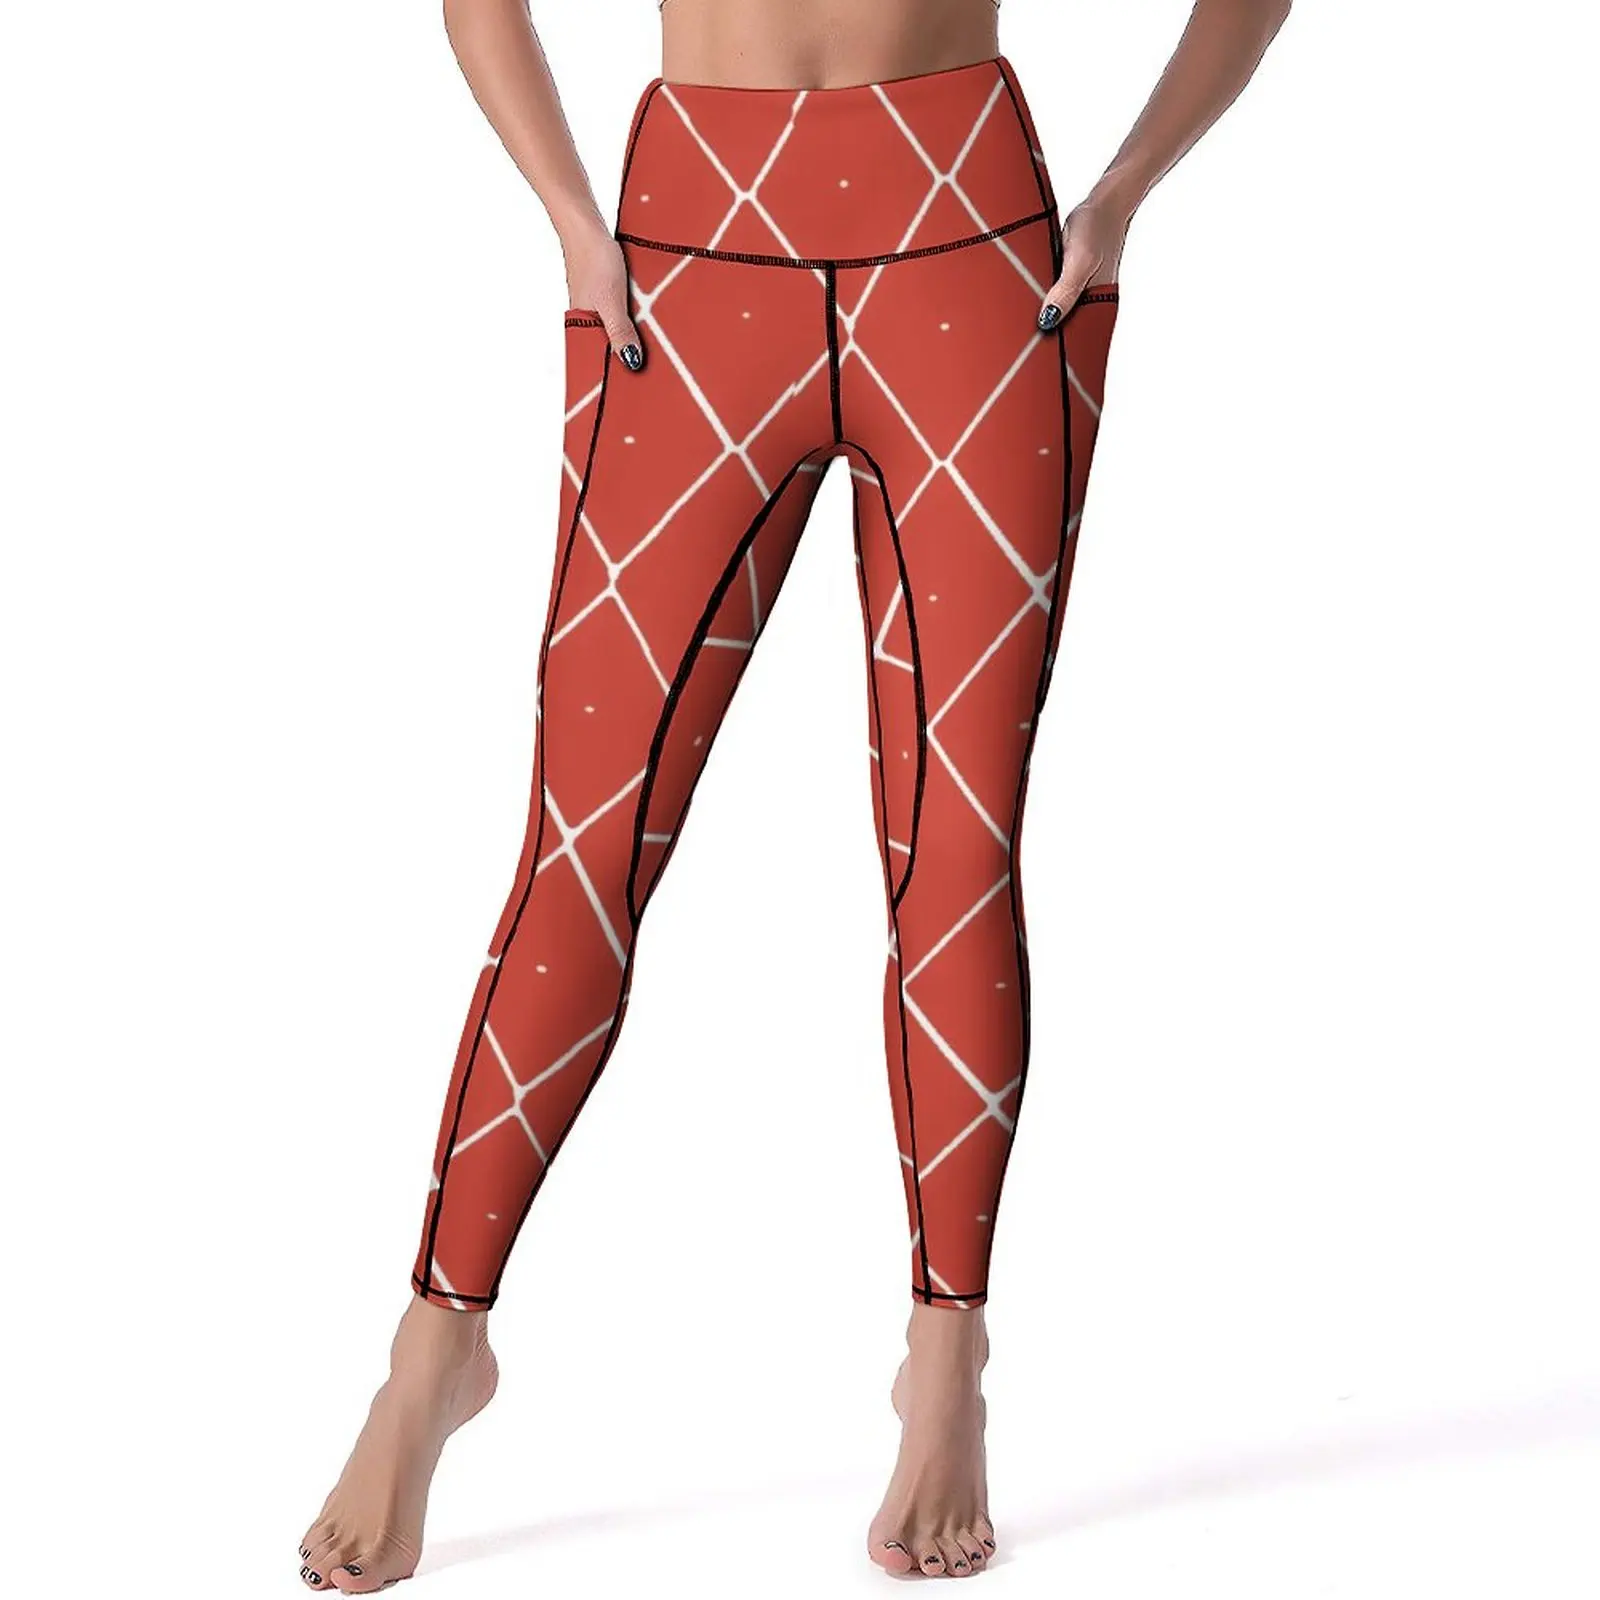 

Jojos Bizzare Adventures Yoga Pants Sexy Guido Mista Red Graphic Leggings Push Up Running Leggins Elegant Stretch Sports Tights